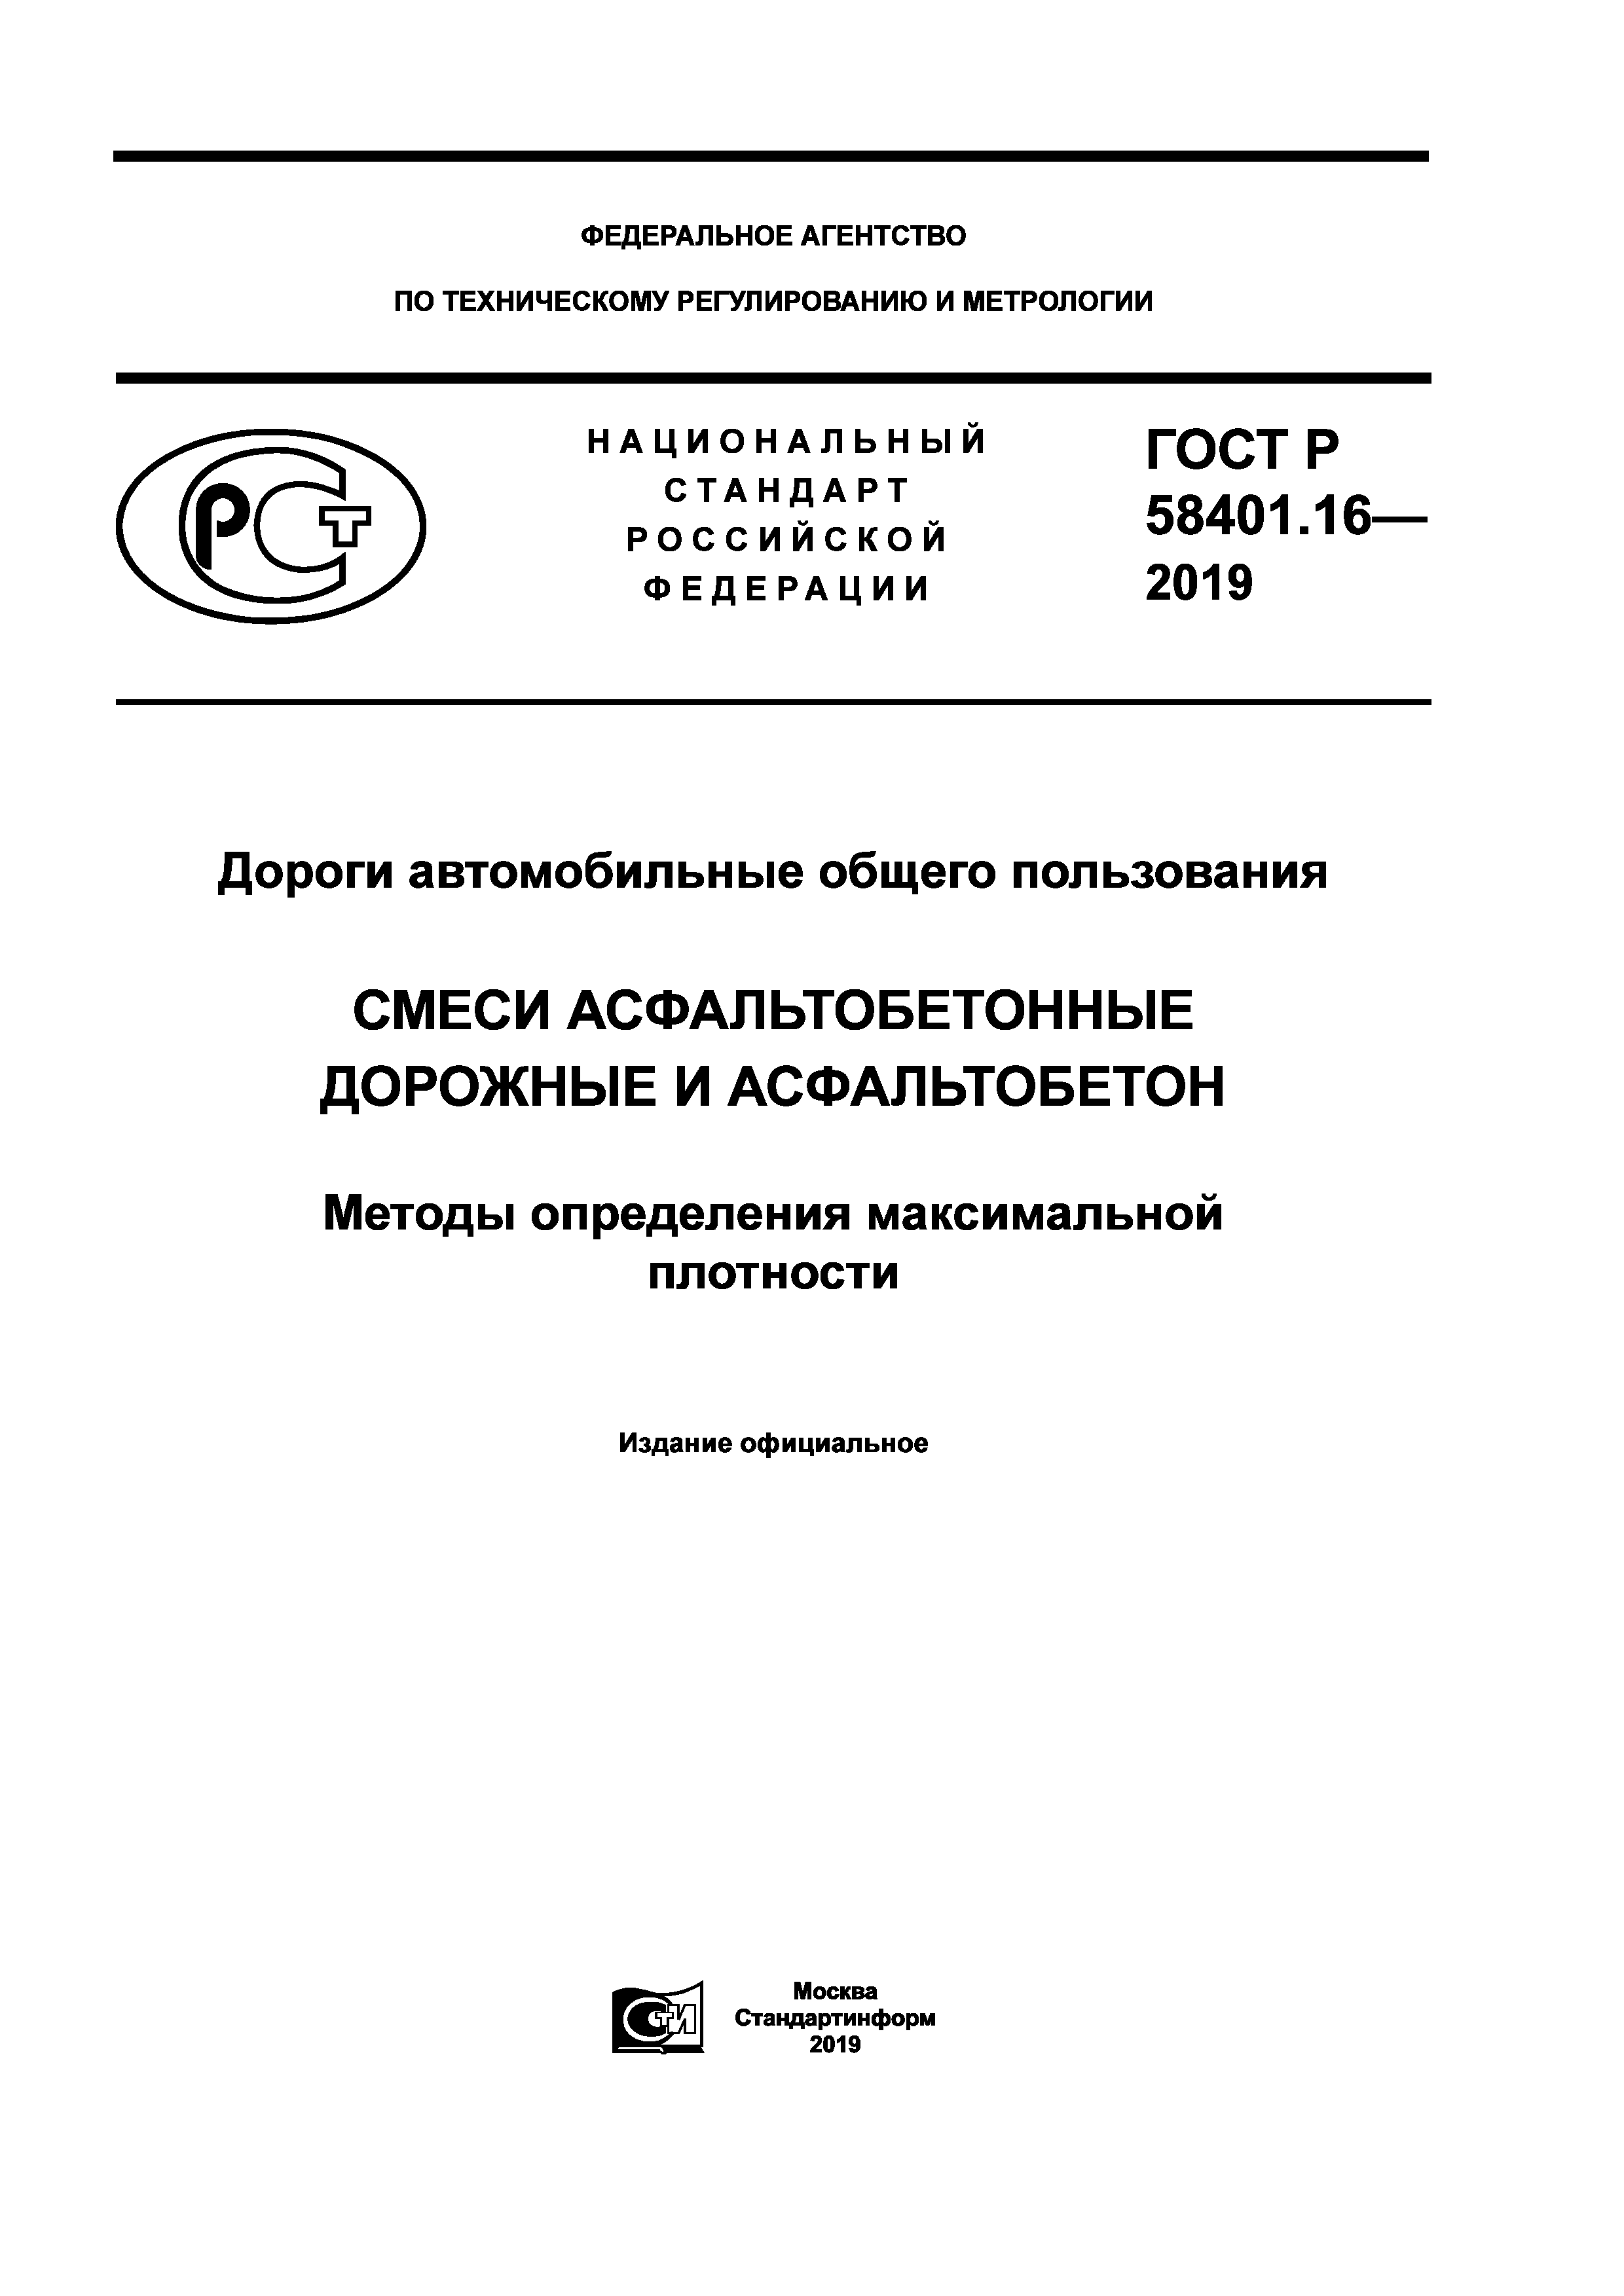 ГОСТ Р 58401.16-2019